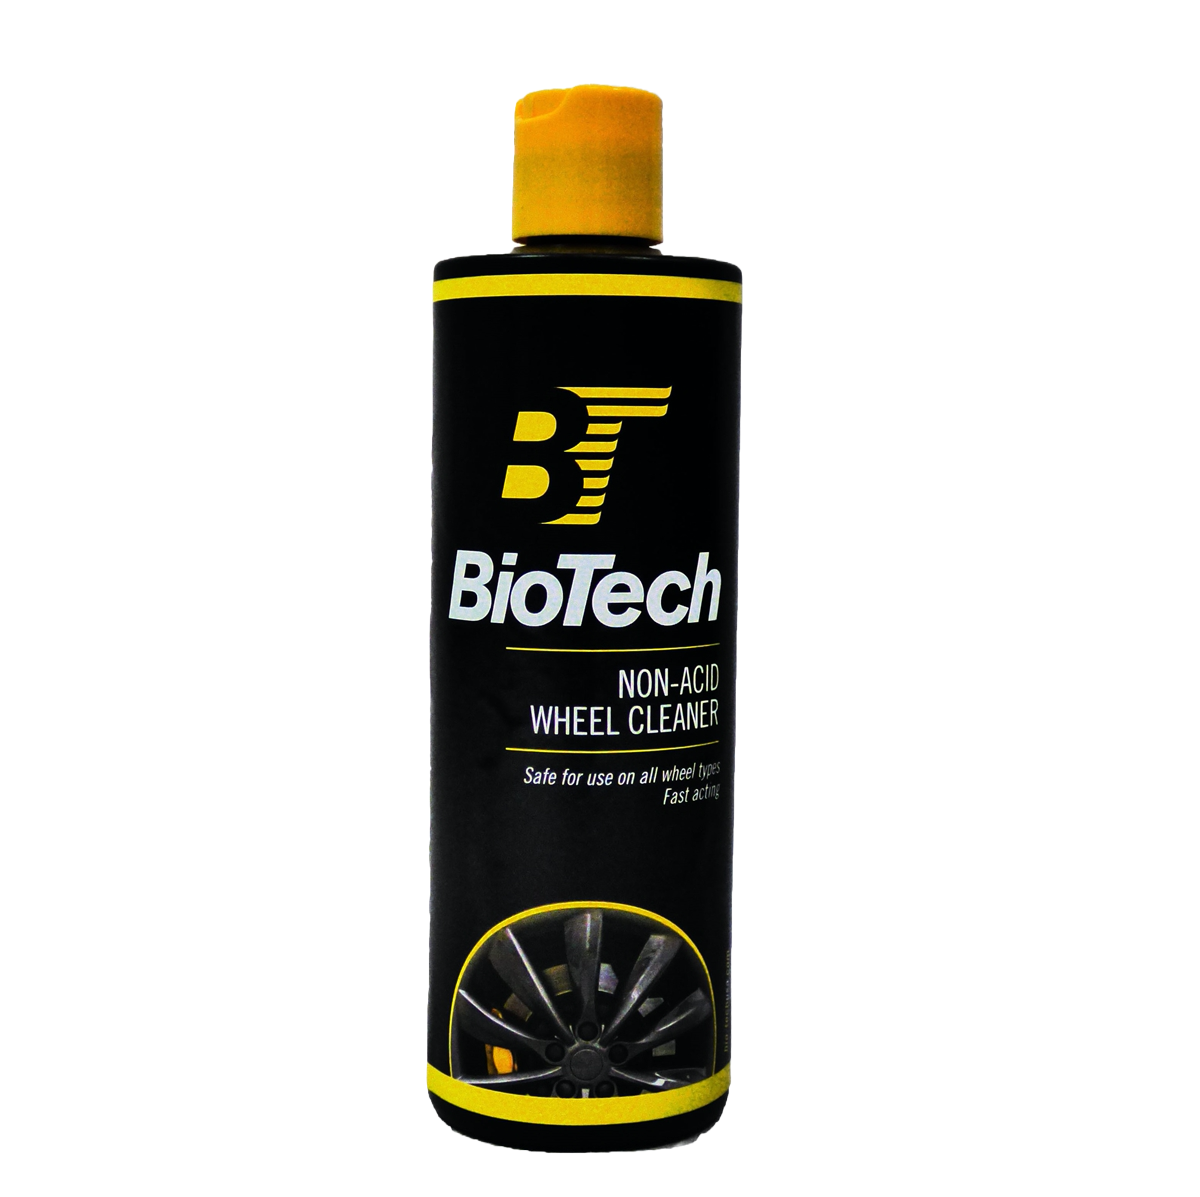 Biotech Non-Acid Wheel Cleaner